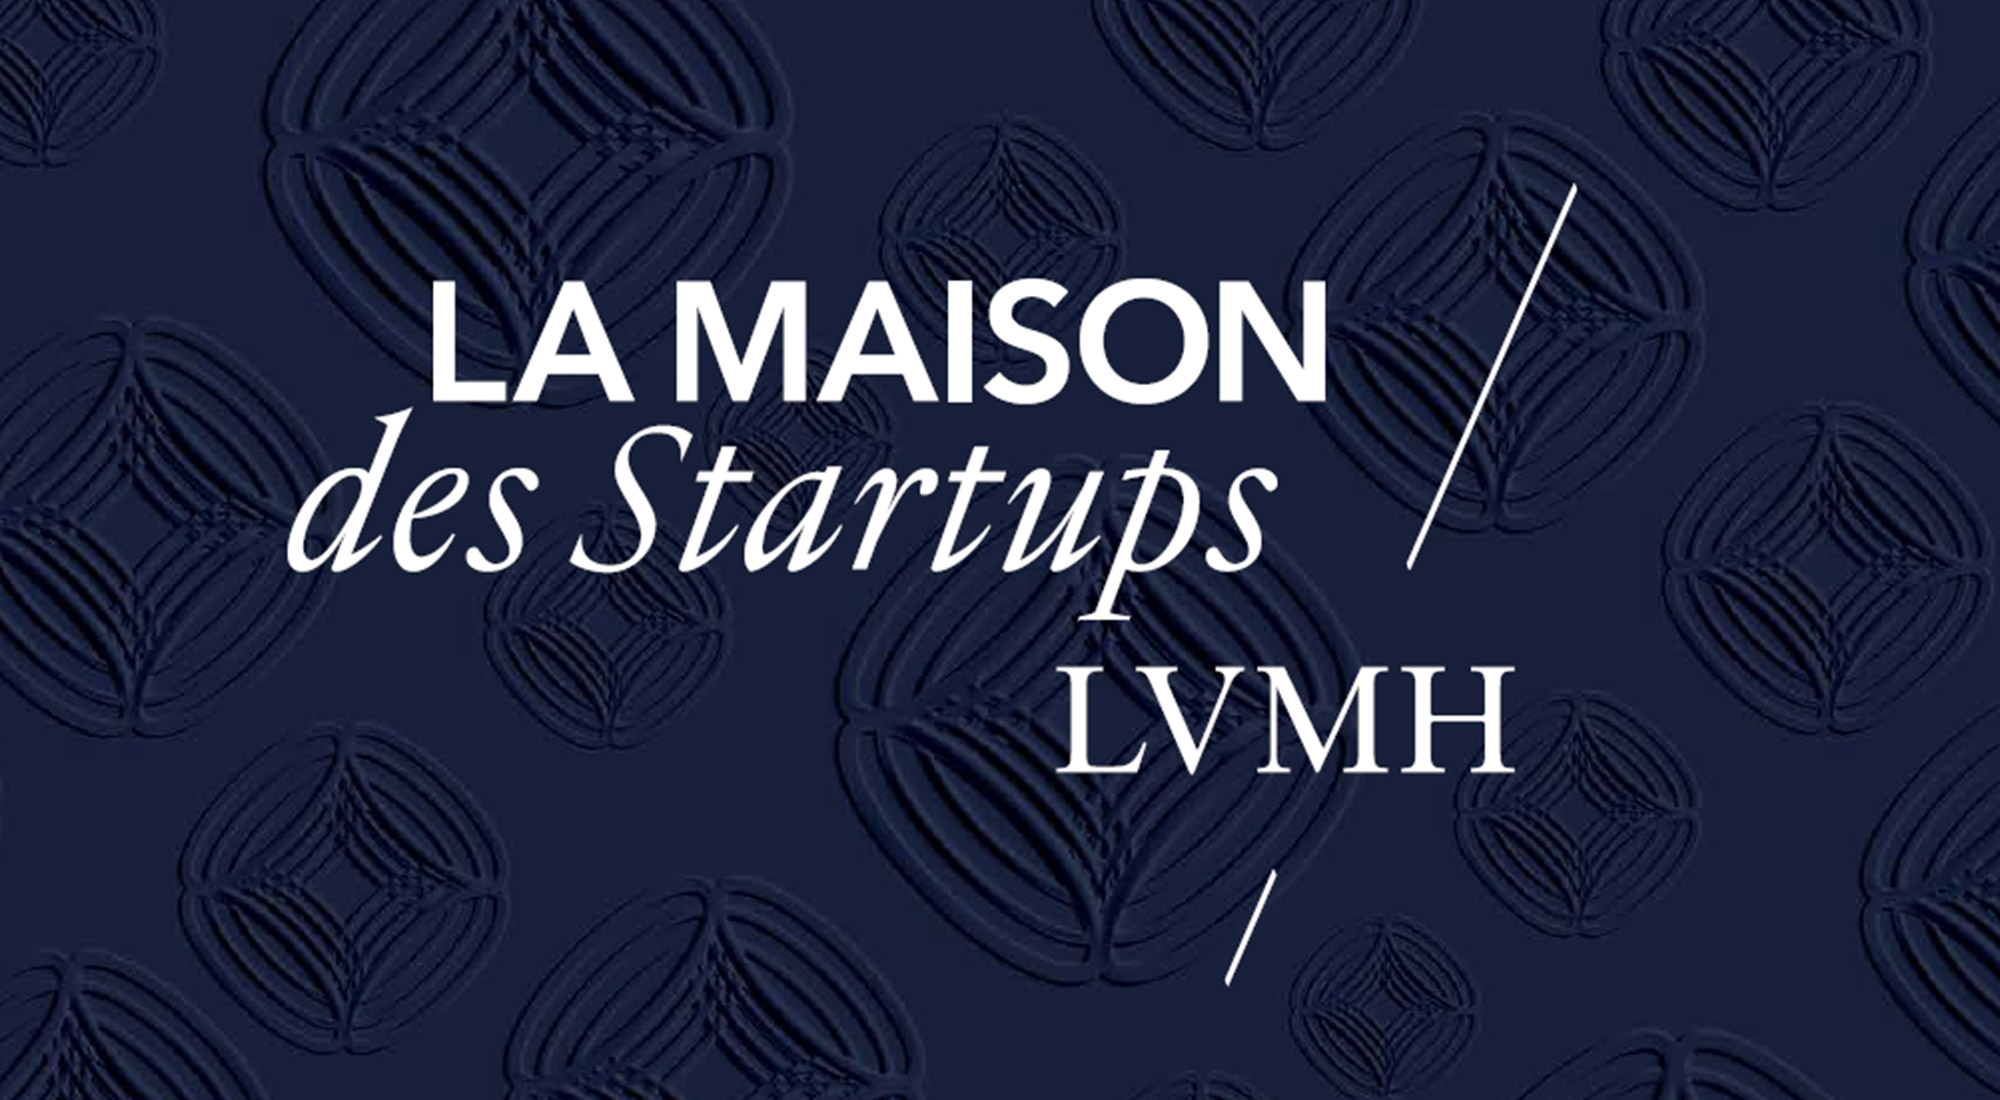 La Maison des Startups LVMH chooses 23 new startups